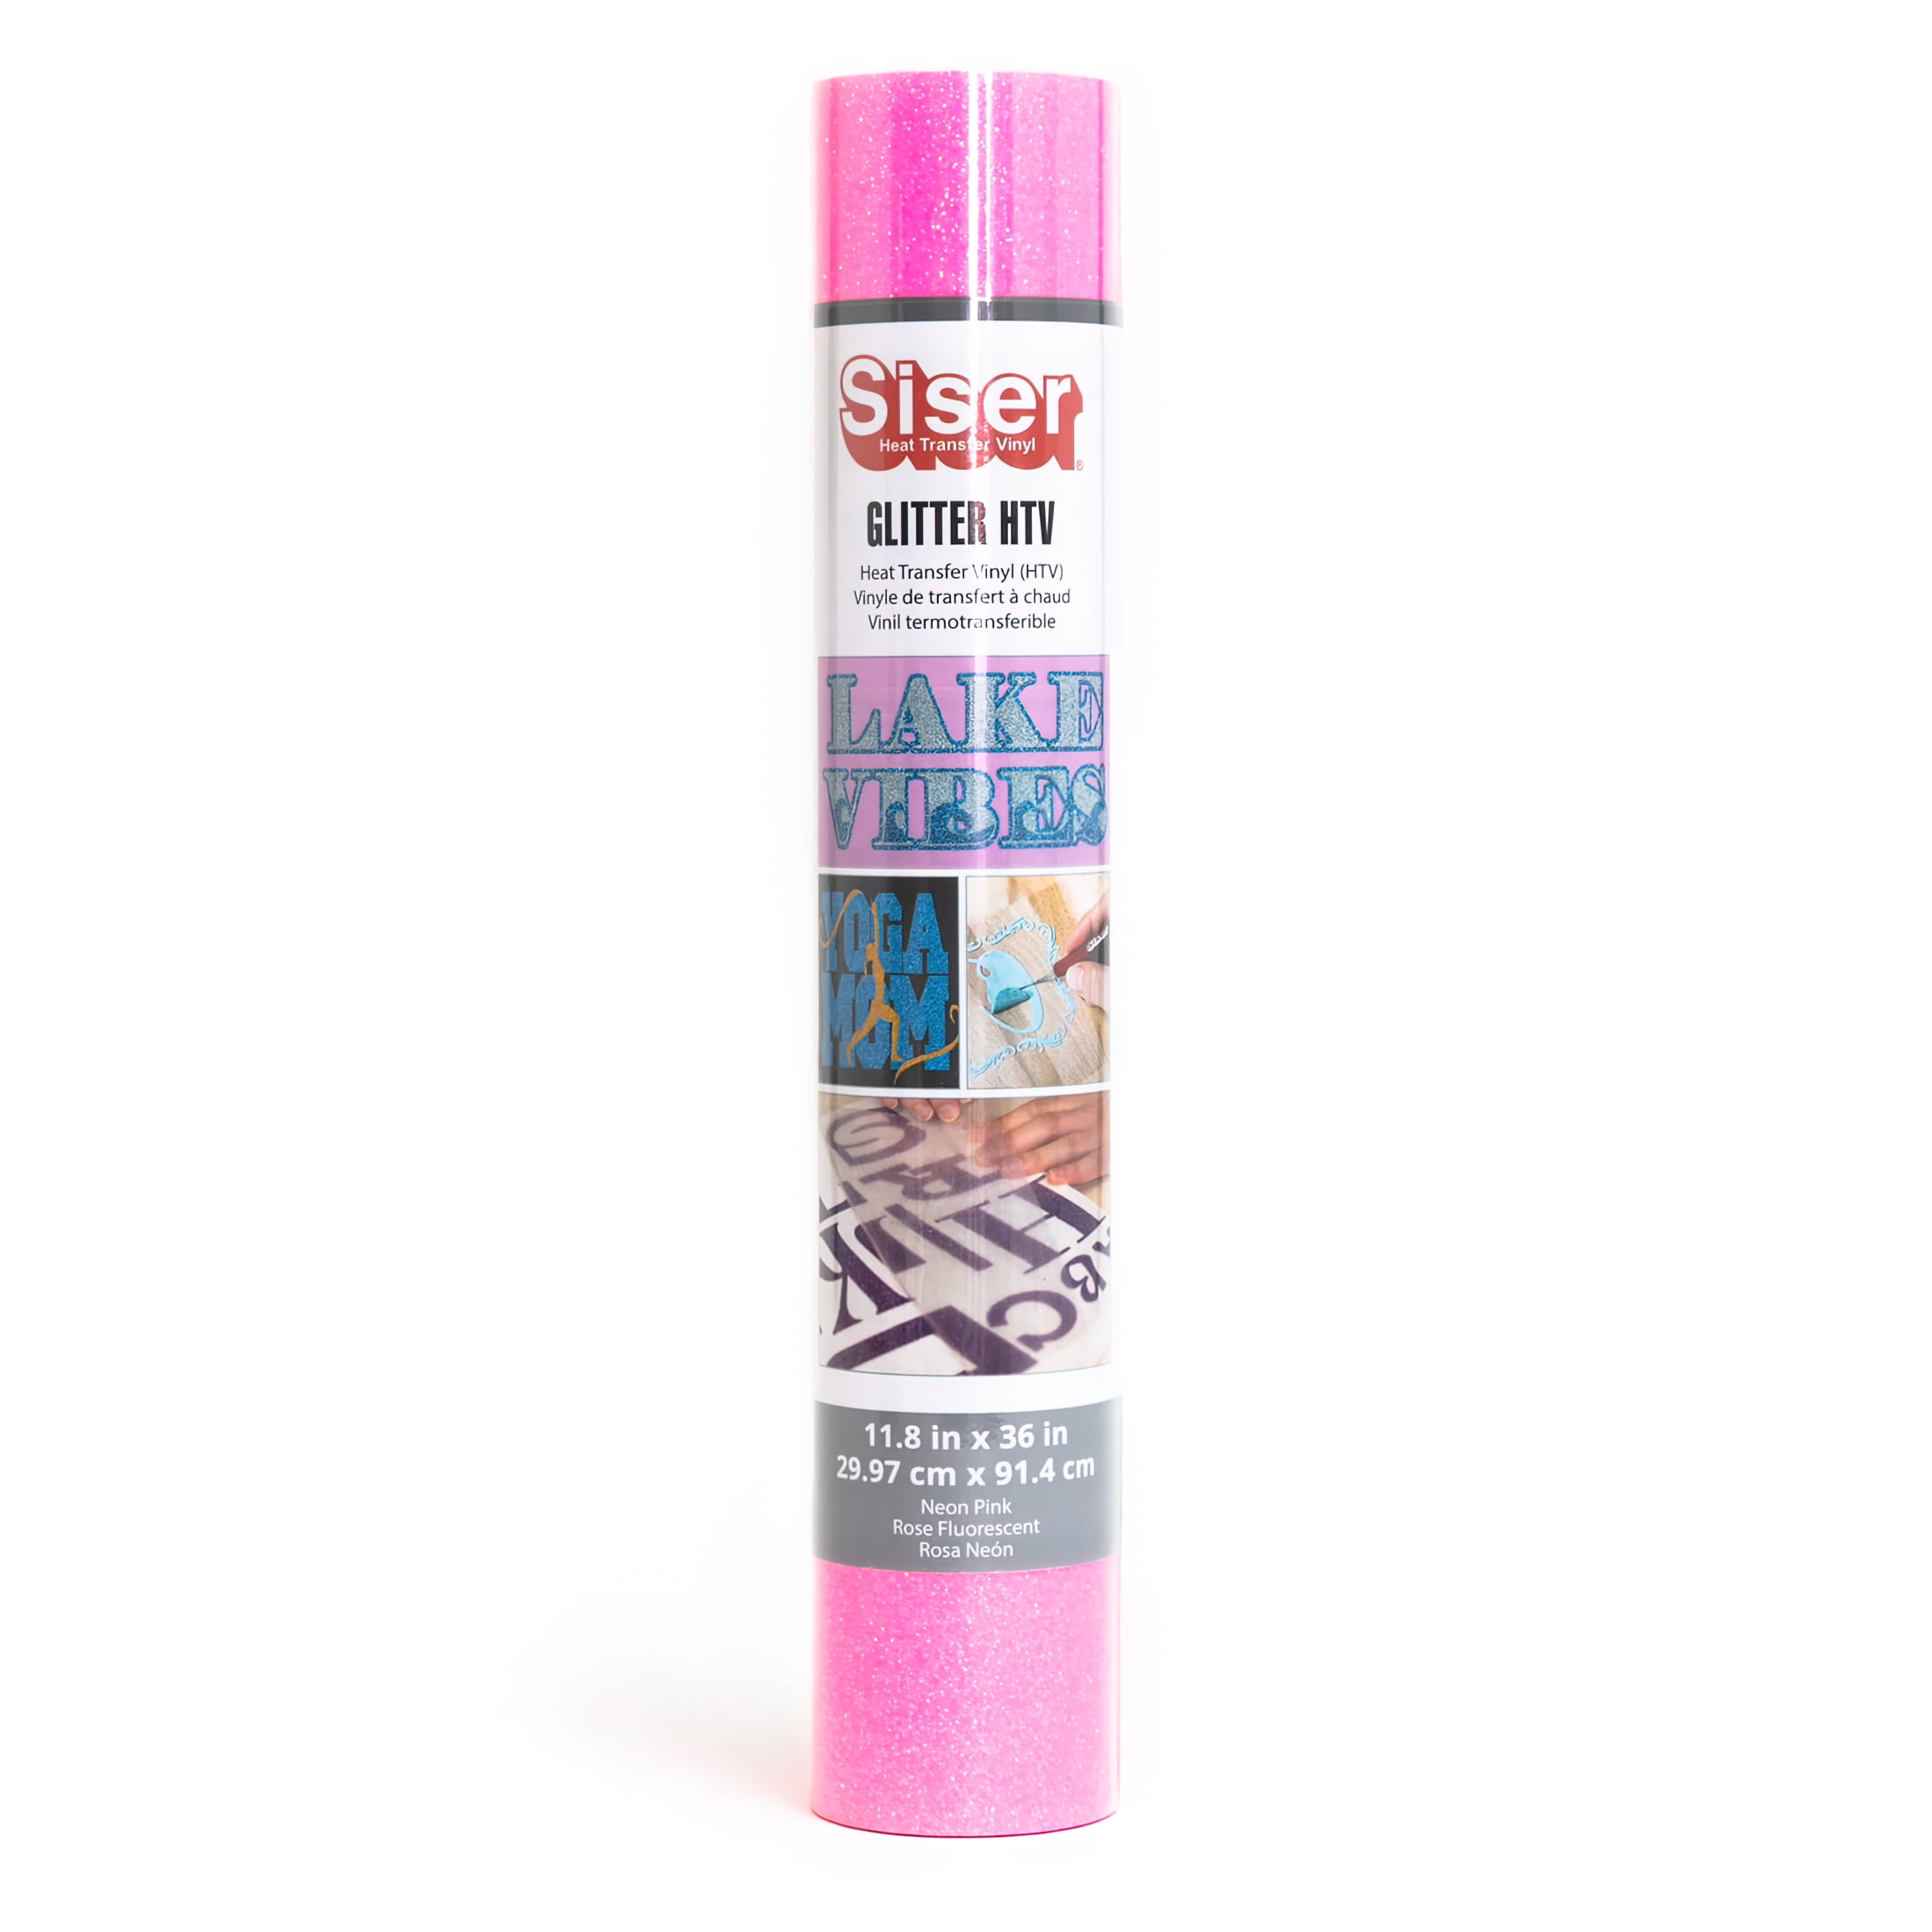  Siser Glitter HTV 12x3ft Roll (Neon Pink) Iron on Heat  Transfer Vinyl : Arts, Crafts & Sewing